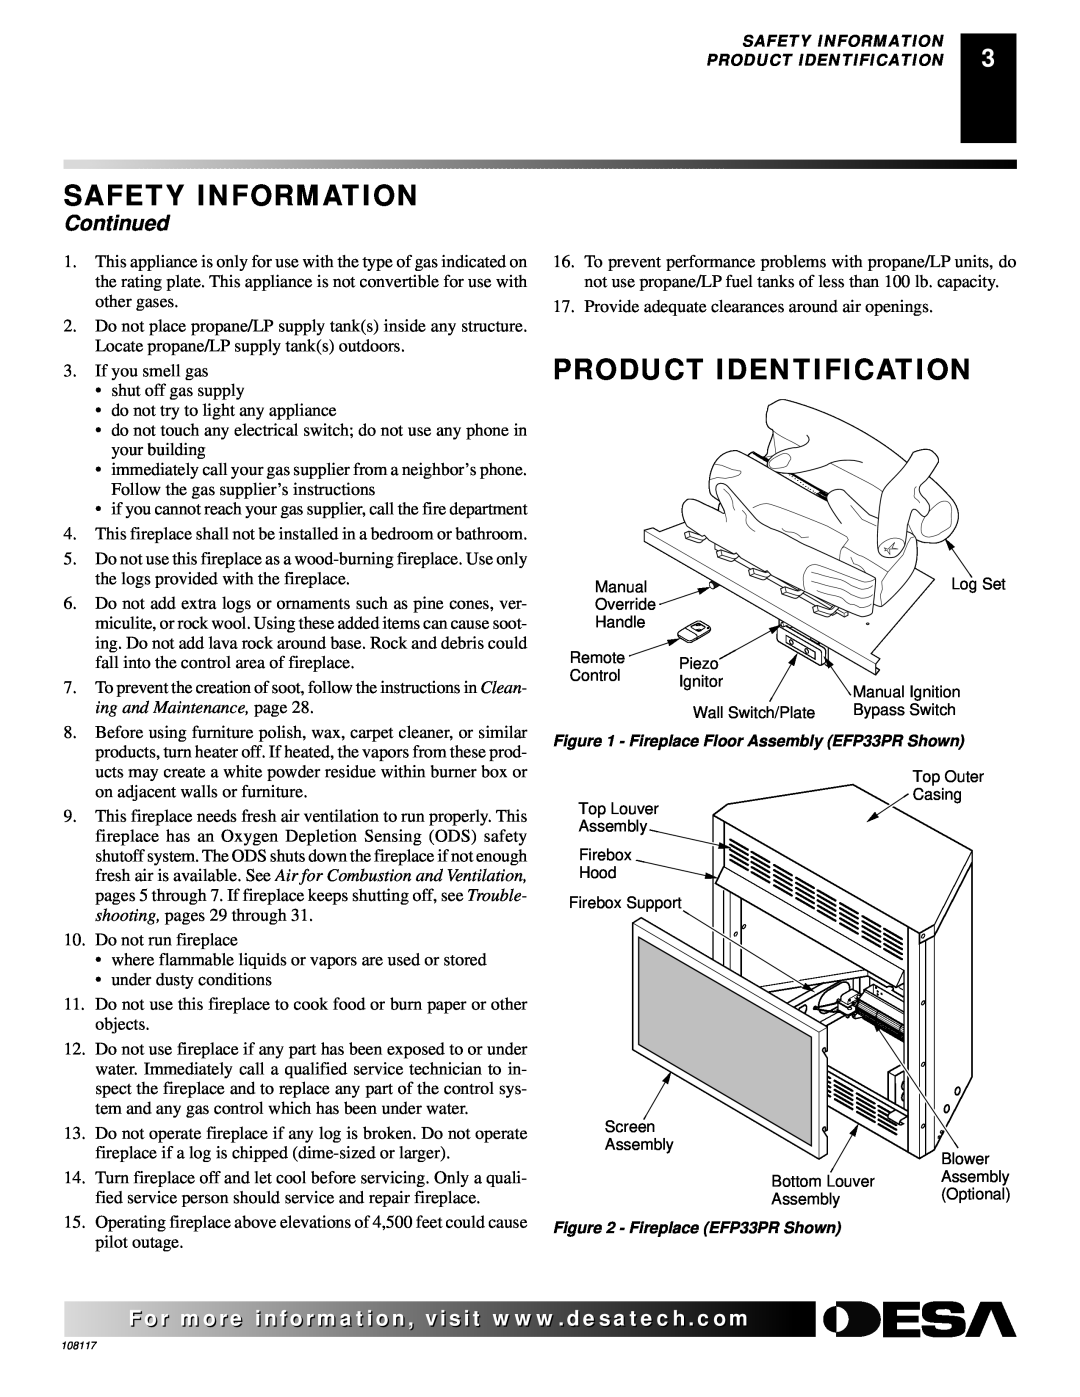 Desa VTGF33NR, VTGF33PR, CGEFP33PR installation manual Product Identification, Continued, Safety Information 